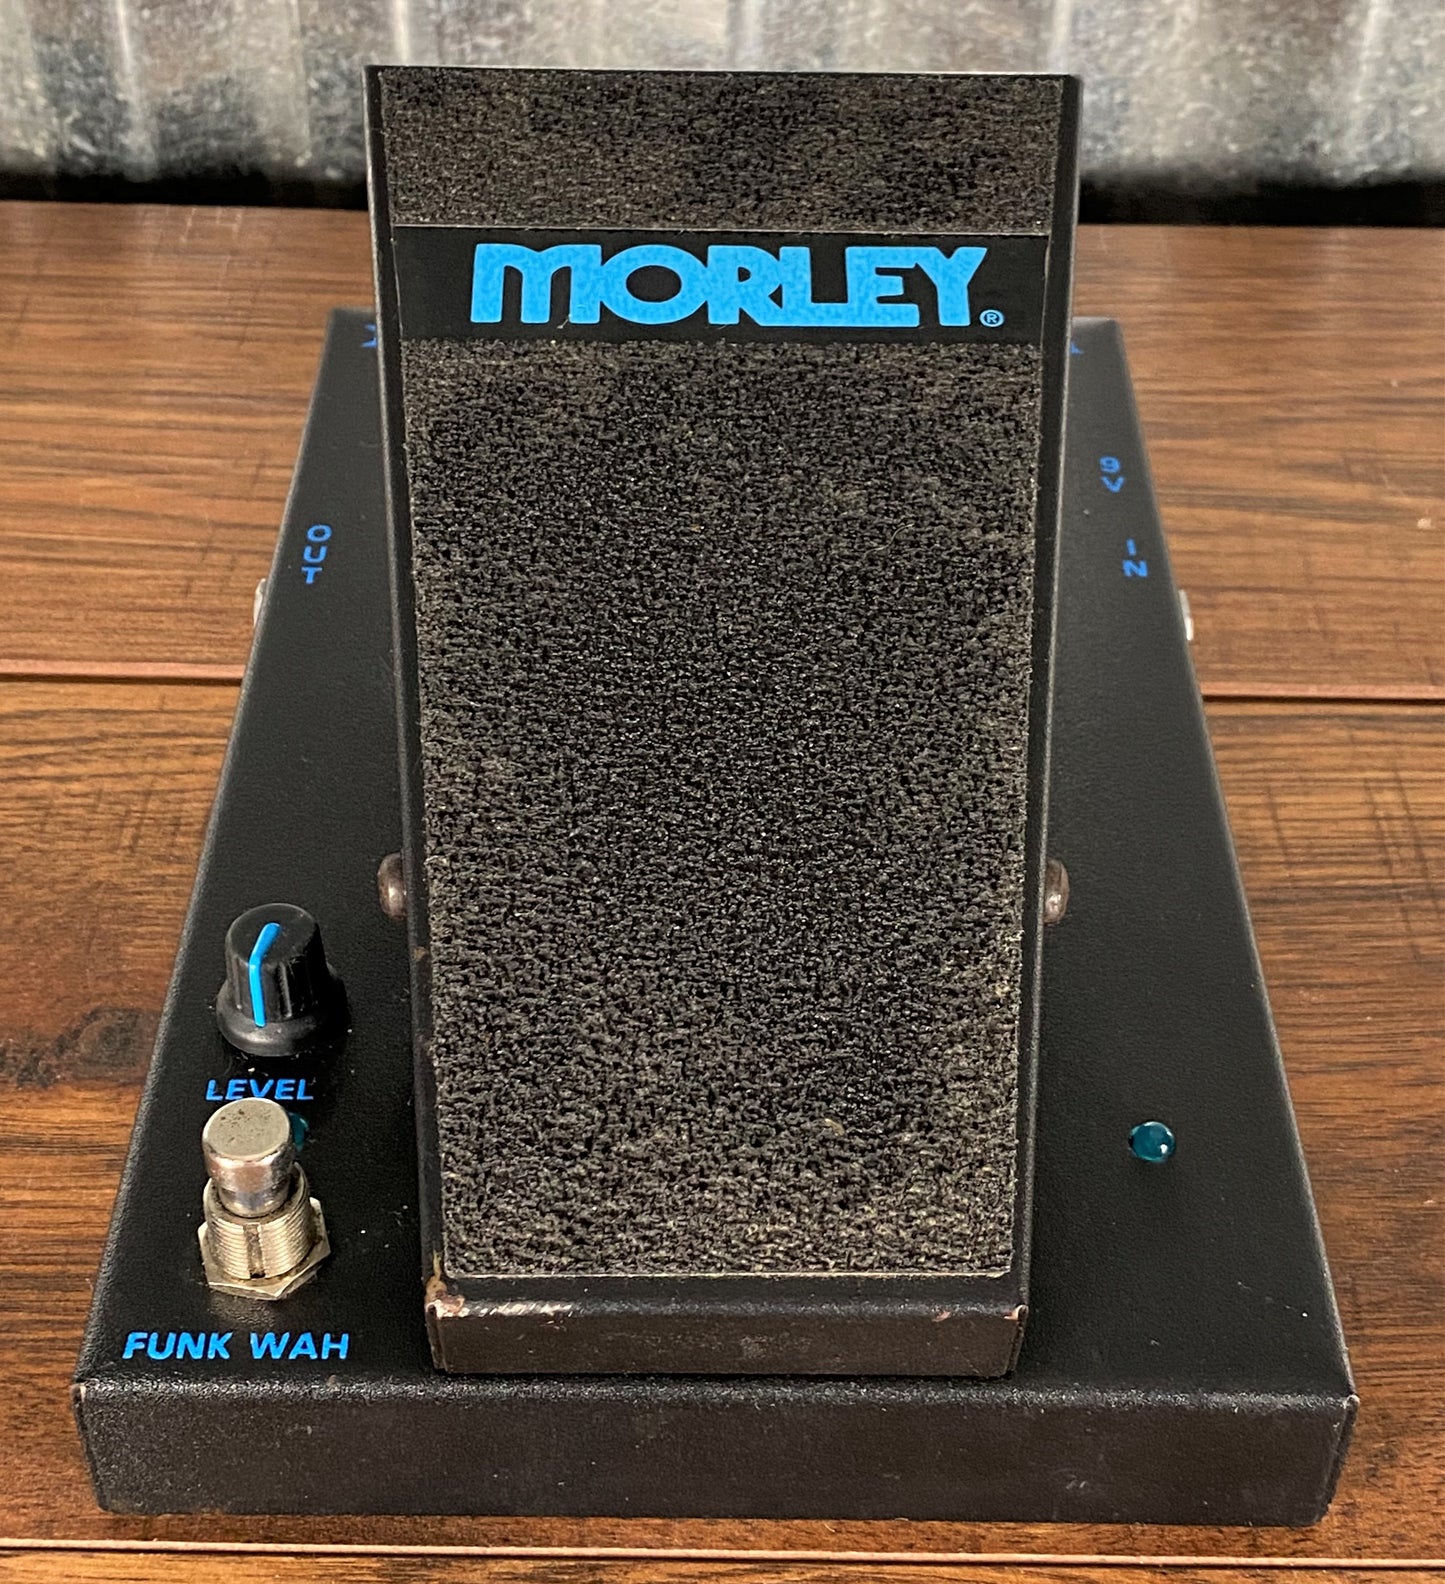 Morley PBA-2 Dual Bass Wah Effect Pedal Used